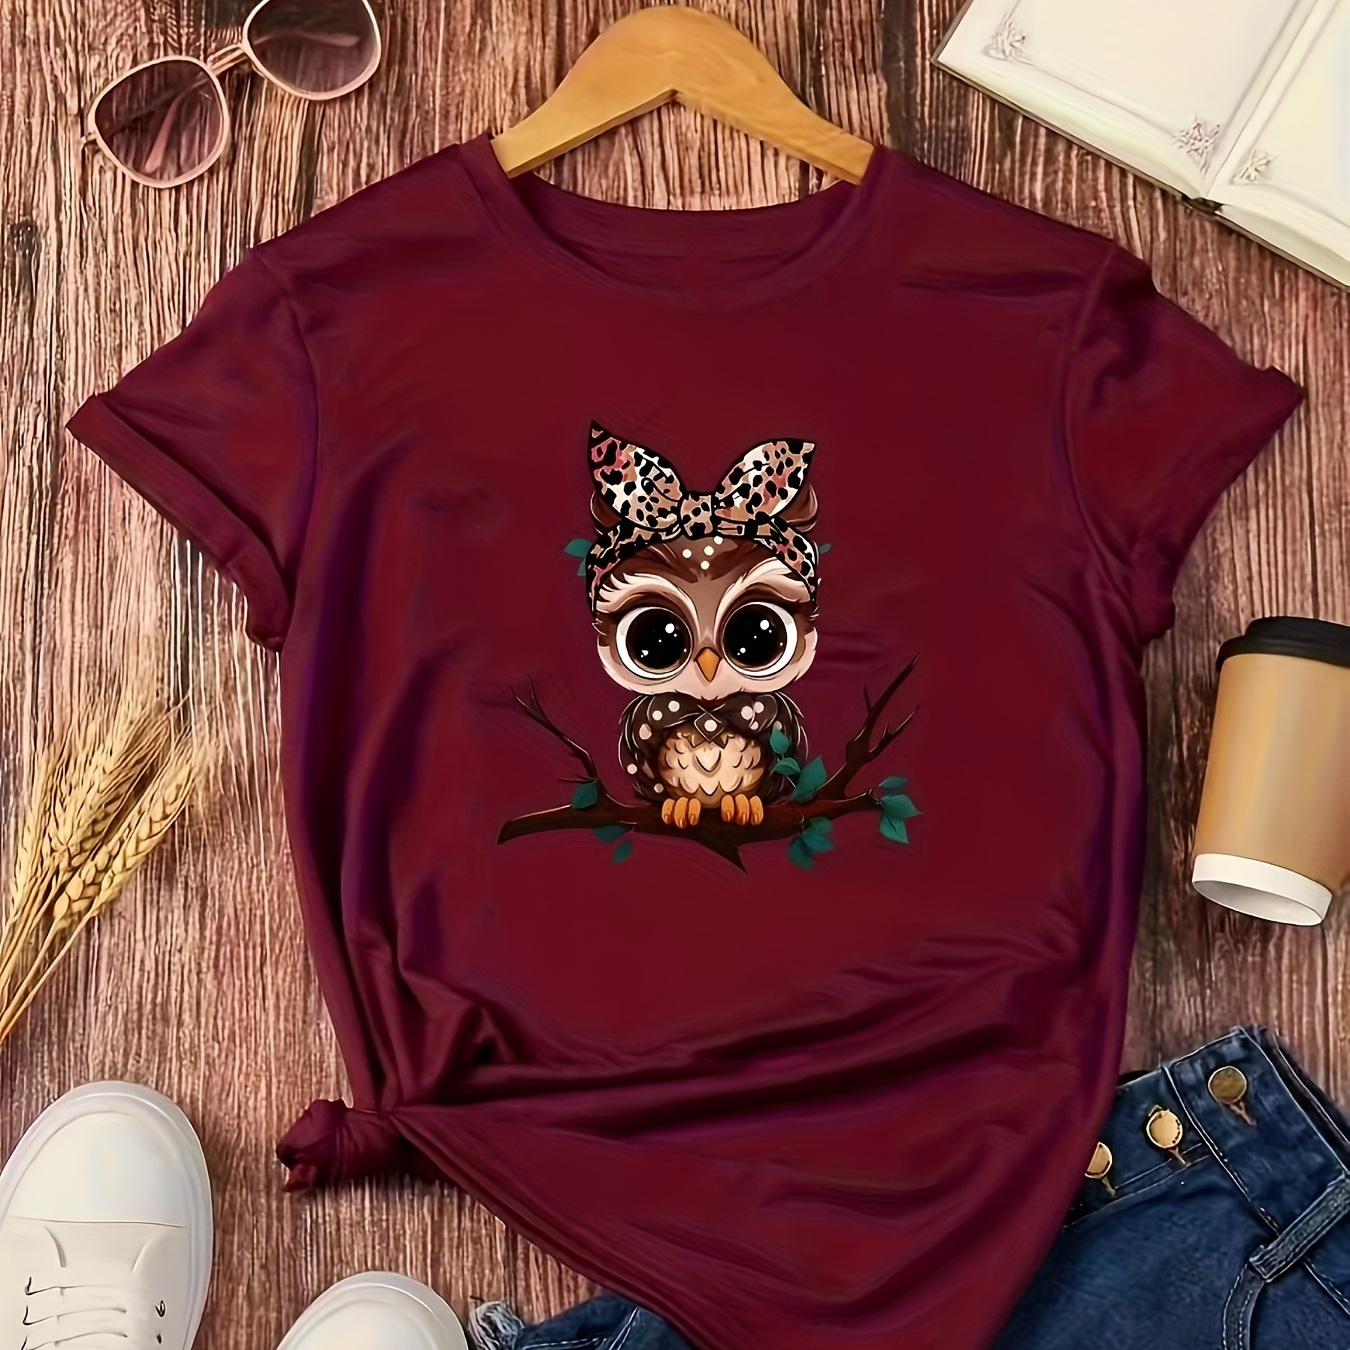 

Cartoon Owl Print Crew Neck T-shirt, Short Sleeve Casual Top For Spring & Summer, Women's Clothing